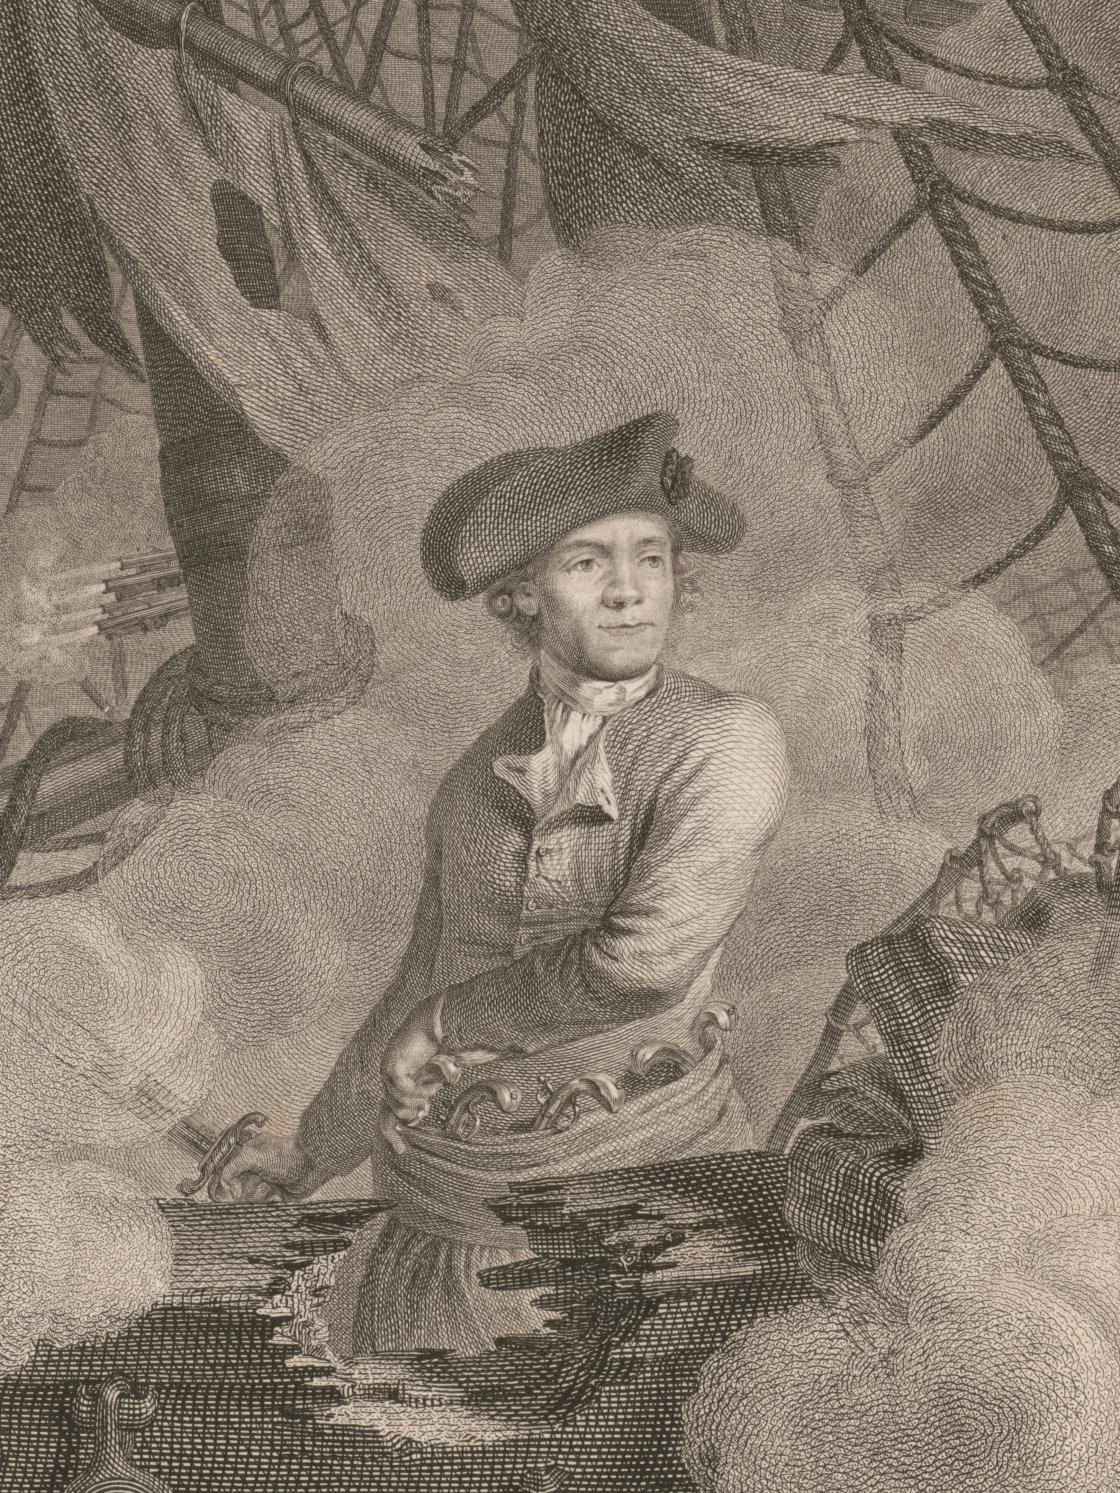 Portrait of John Paul Jones on his ship USS Bonhomme Richard